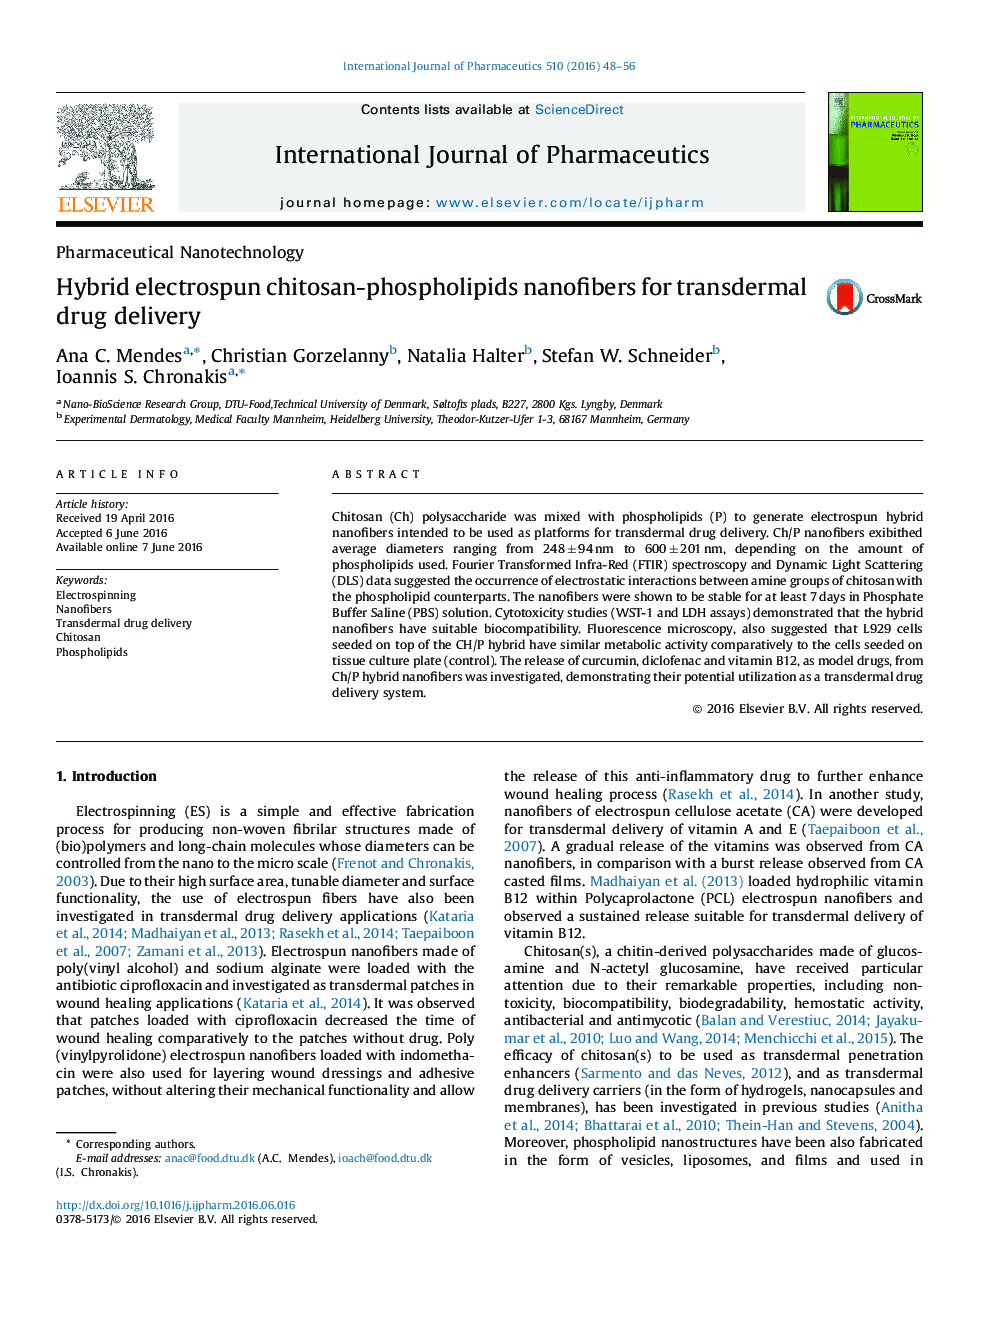 Hybrid electrospun chitosan-phospholipids nanofibers for transdermal drug delivery